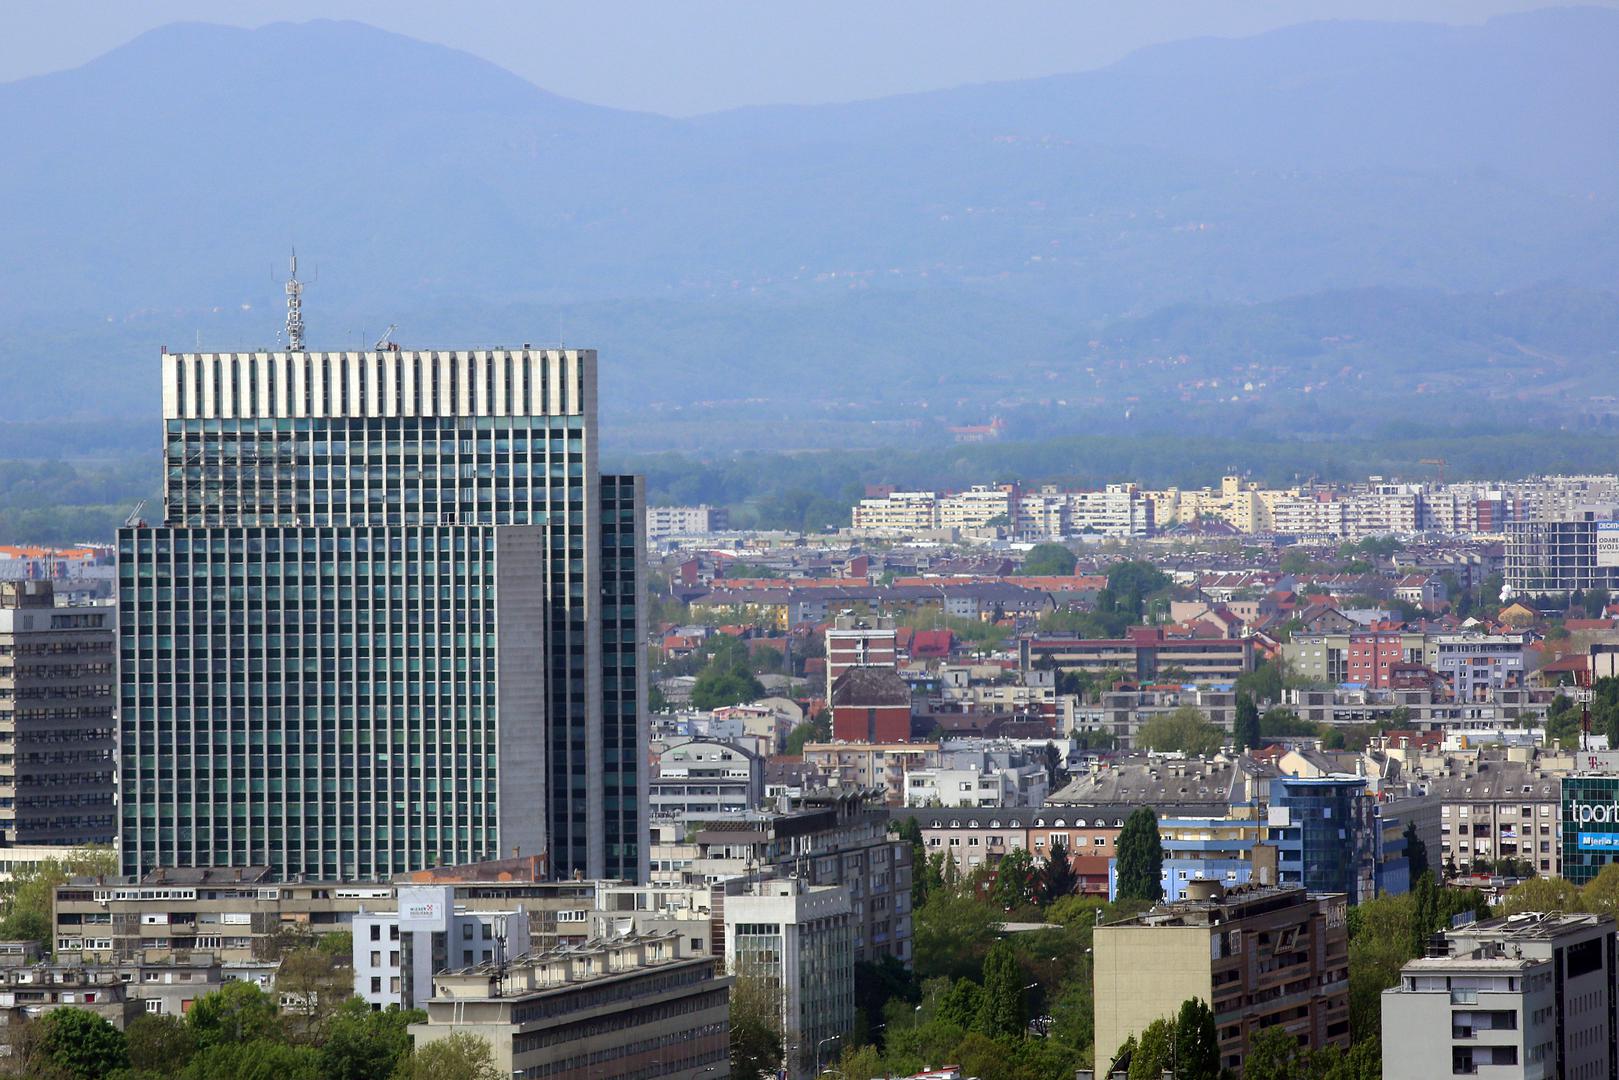 Zagrepčanka je neboder u Zagrebu visok 95 metara s 27 katova. 